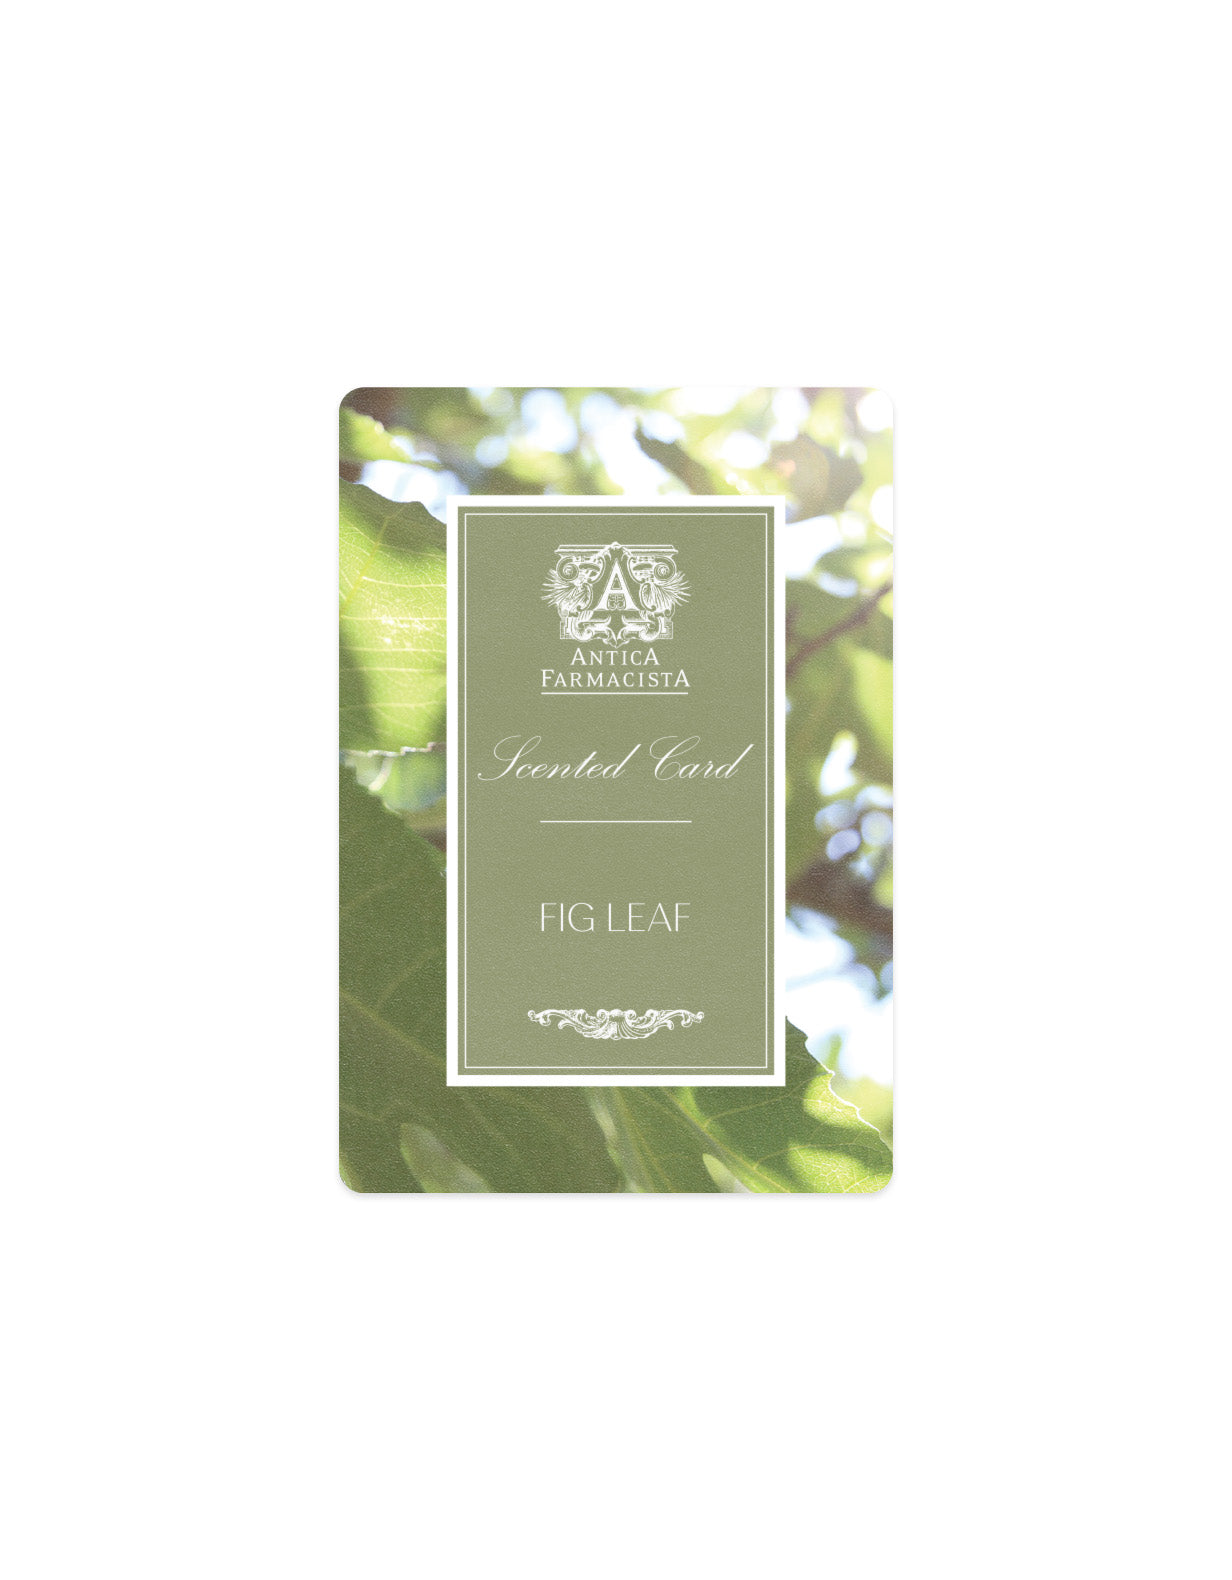 GWP - Scented Card - Fig Leaf